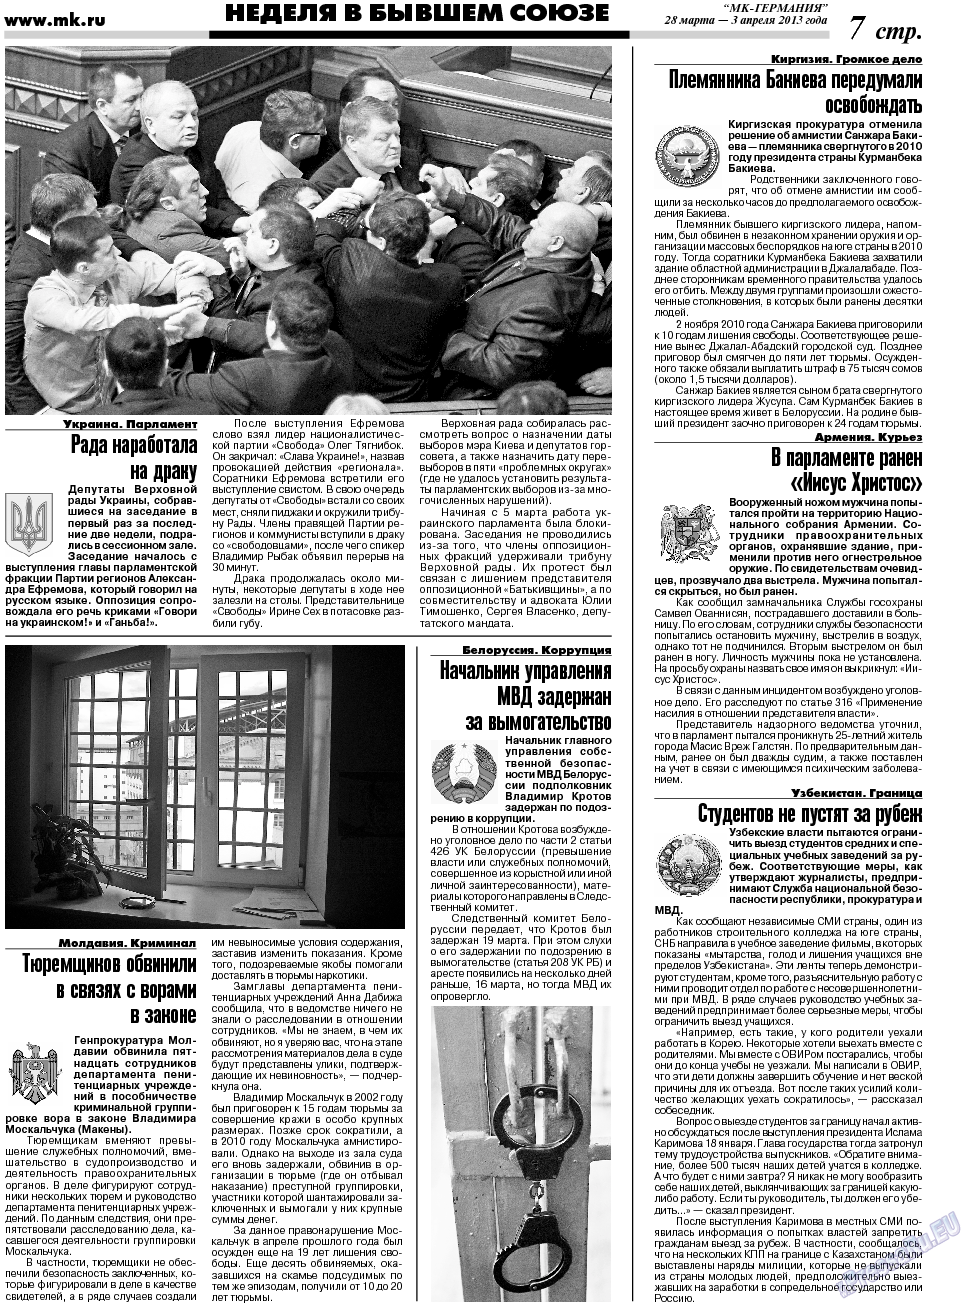 МК-Германия, газета. 2013 №13 стр.7